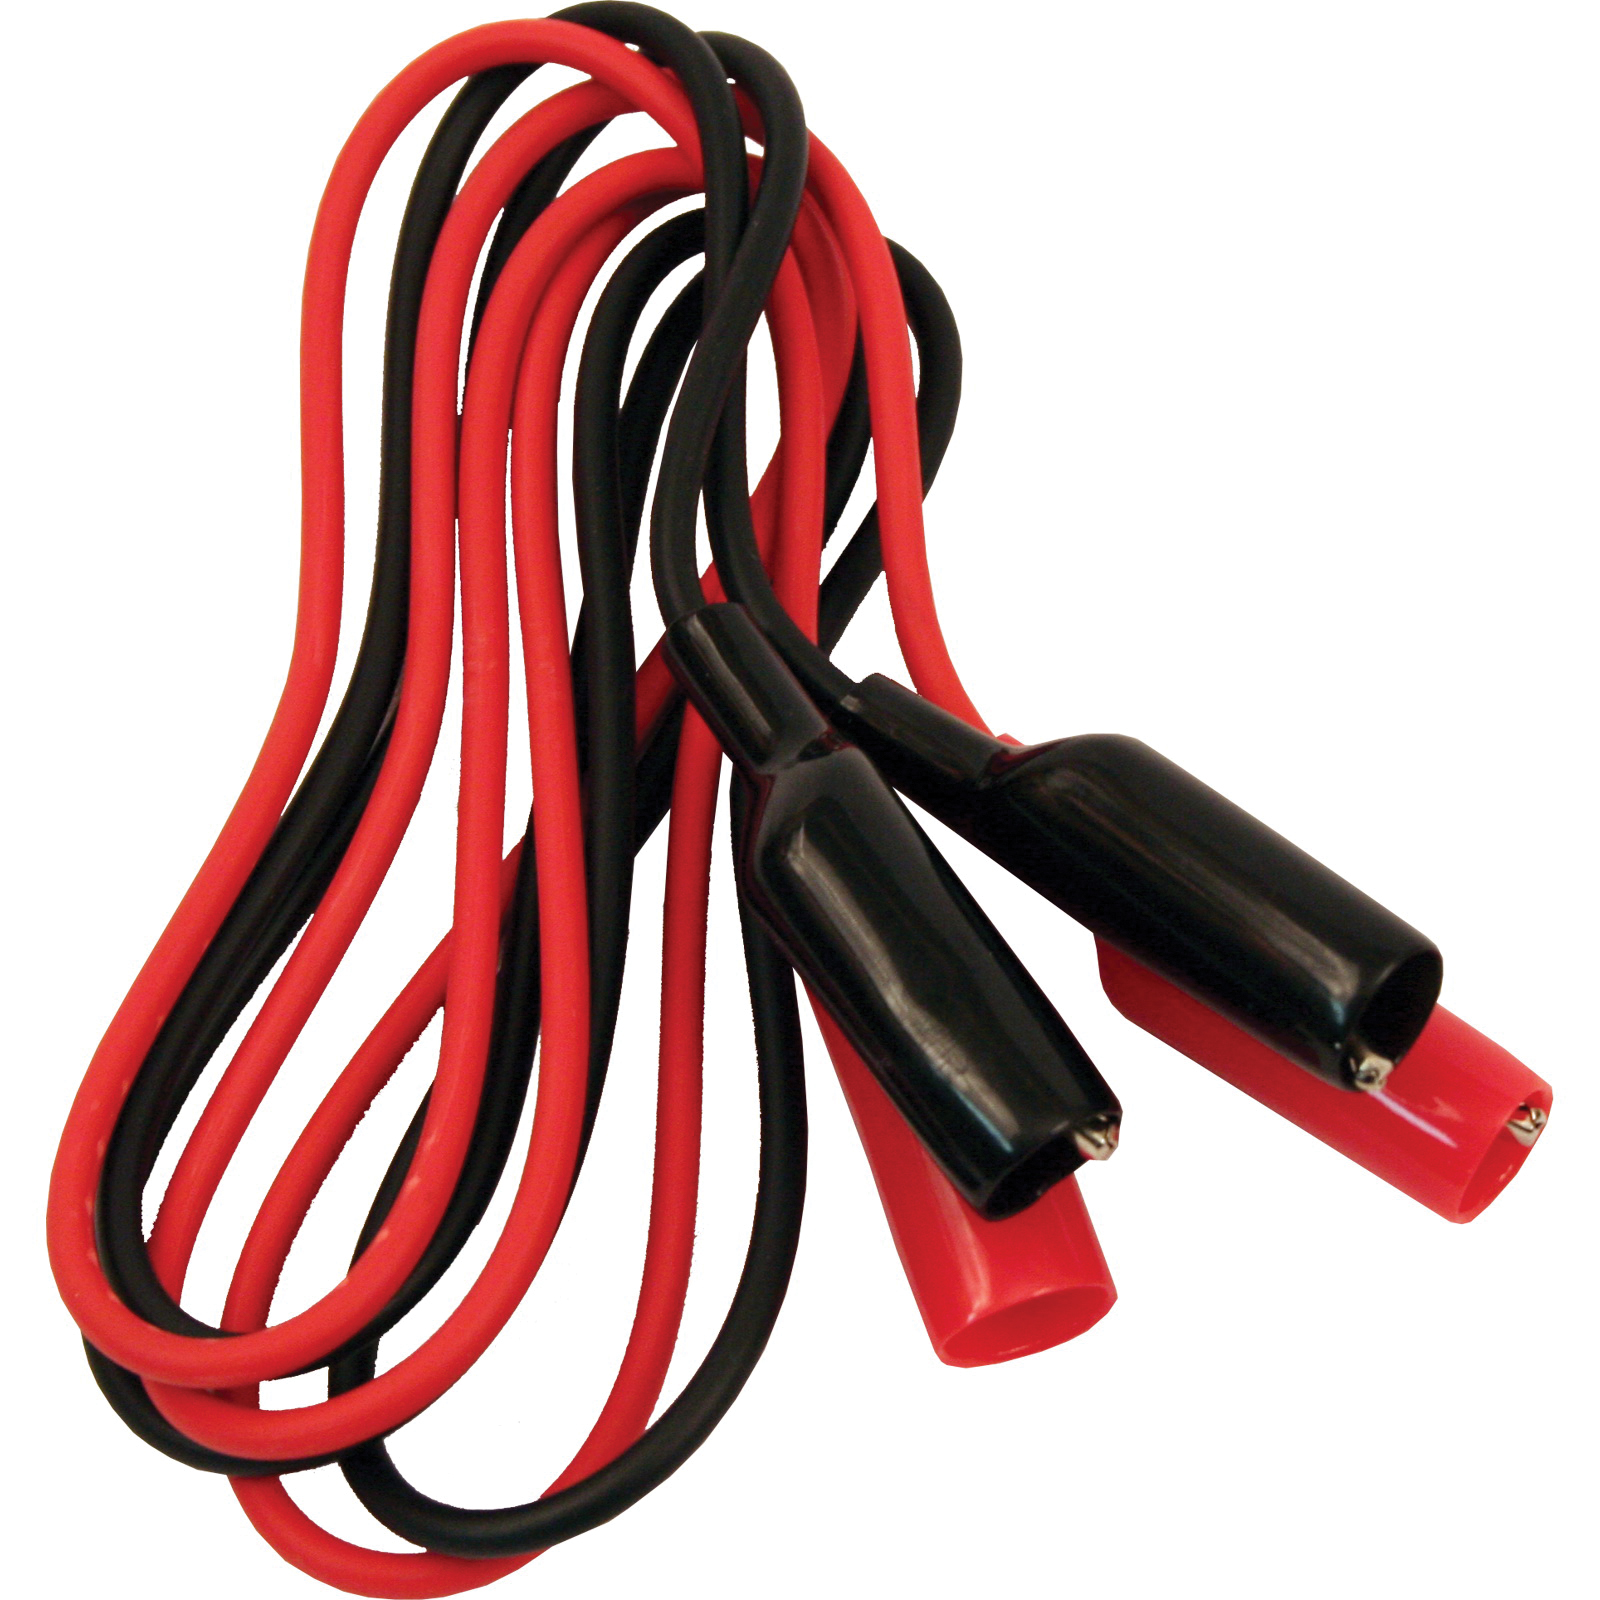 BRAMEC® 13807 Multi-Color Test Lead, 18 ga Rubber Insulation, Black and Red